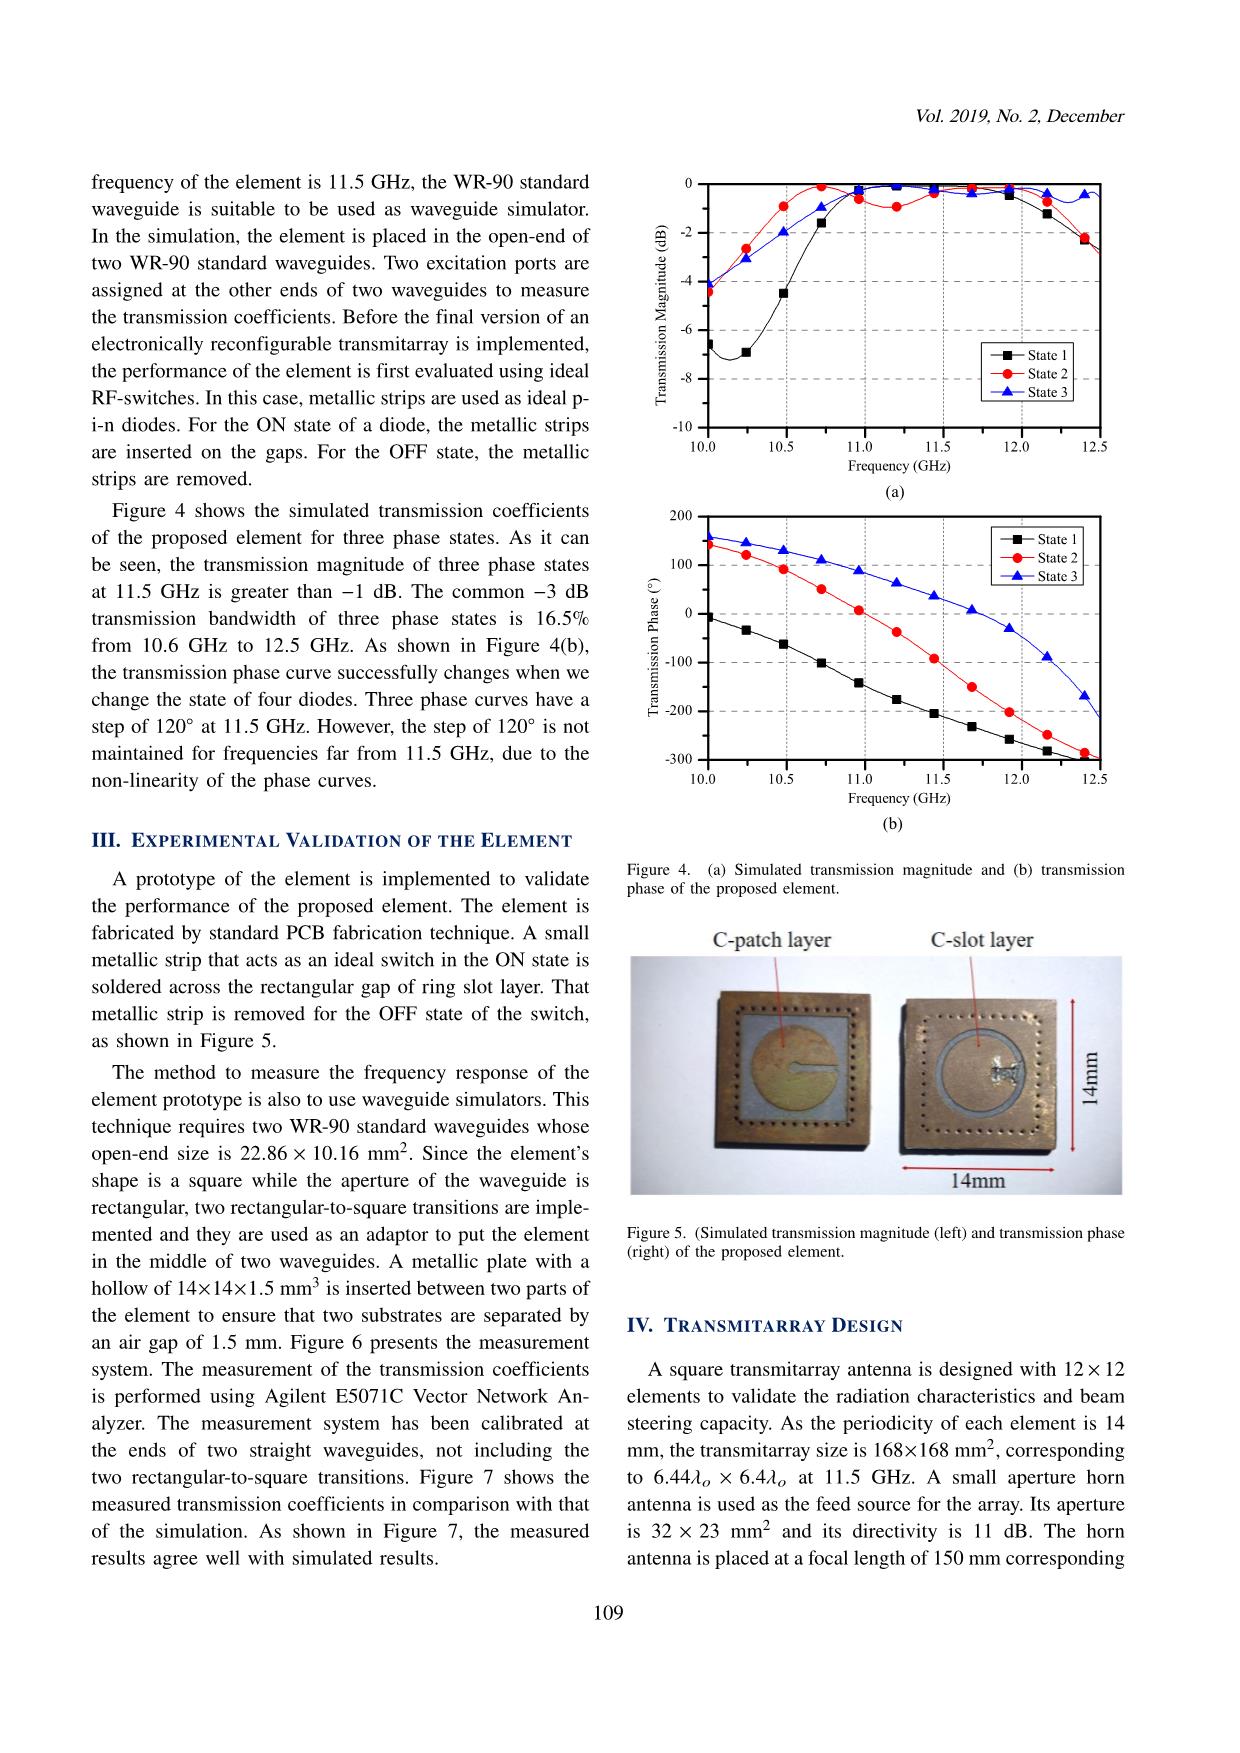 Three phase resolution transmitarray element for electronically reconfigurable transmitarrays trang 4